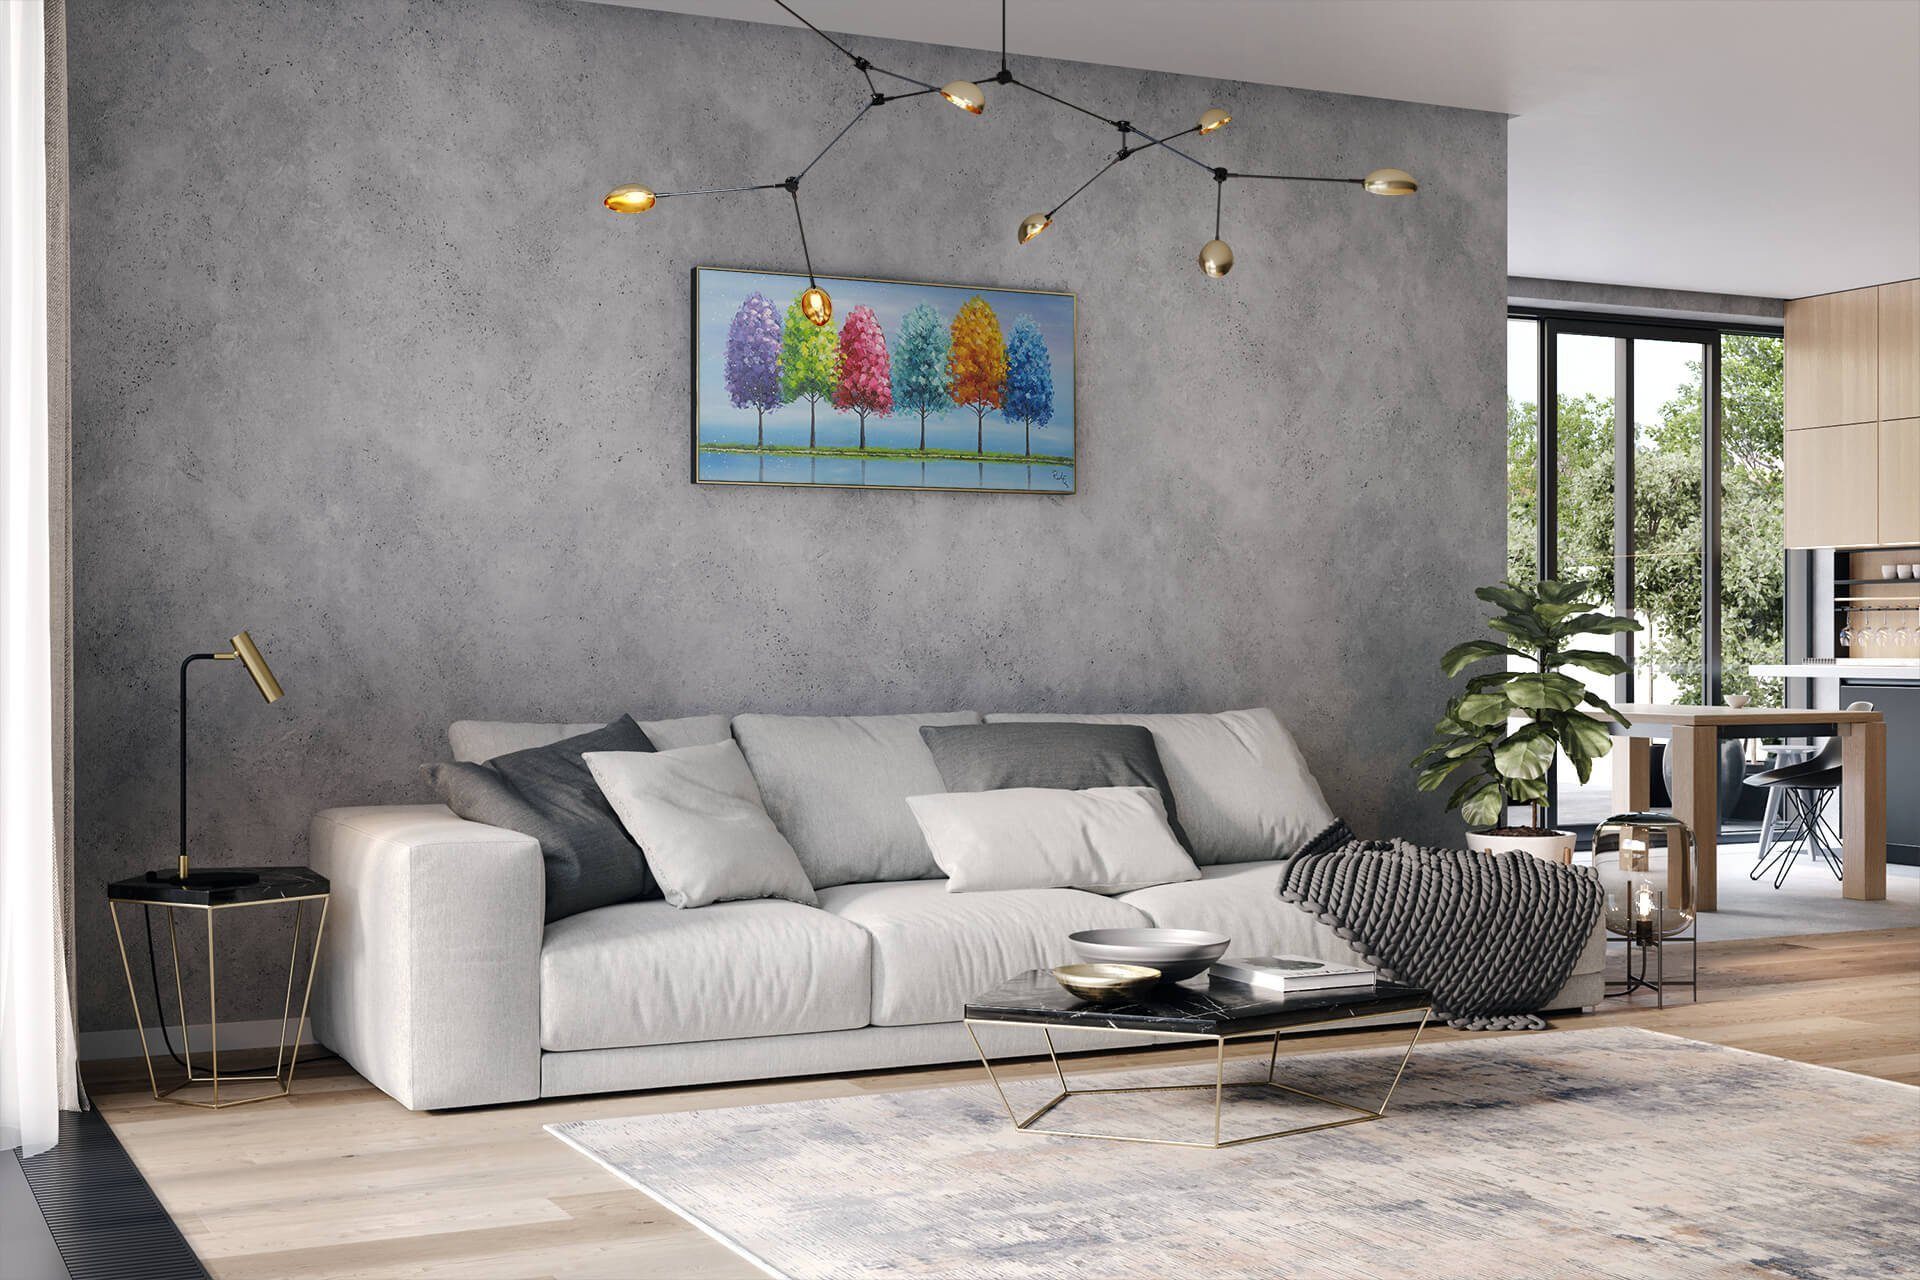 Leinwandbild 120x60 HANDGEMALT Wohnzimmer KUNSTLOFT Gemälde Rainy Season cm, 100% Wandbild